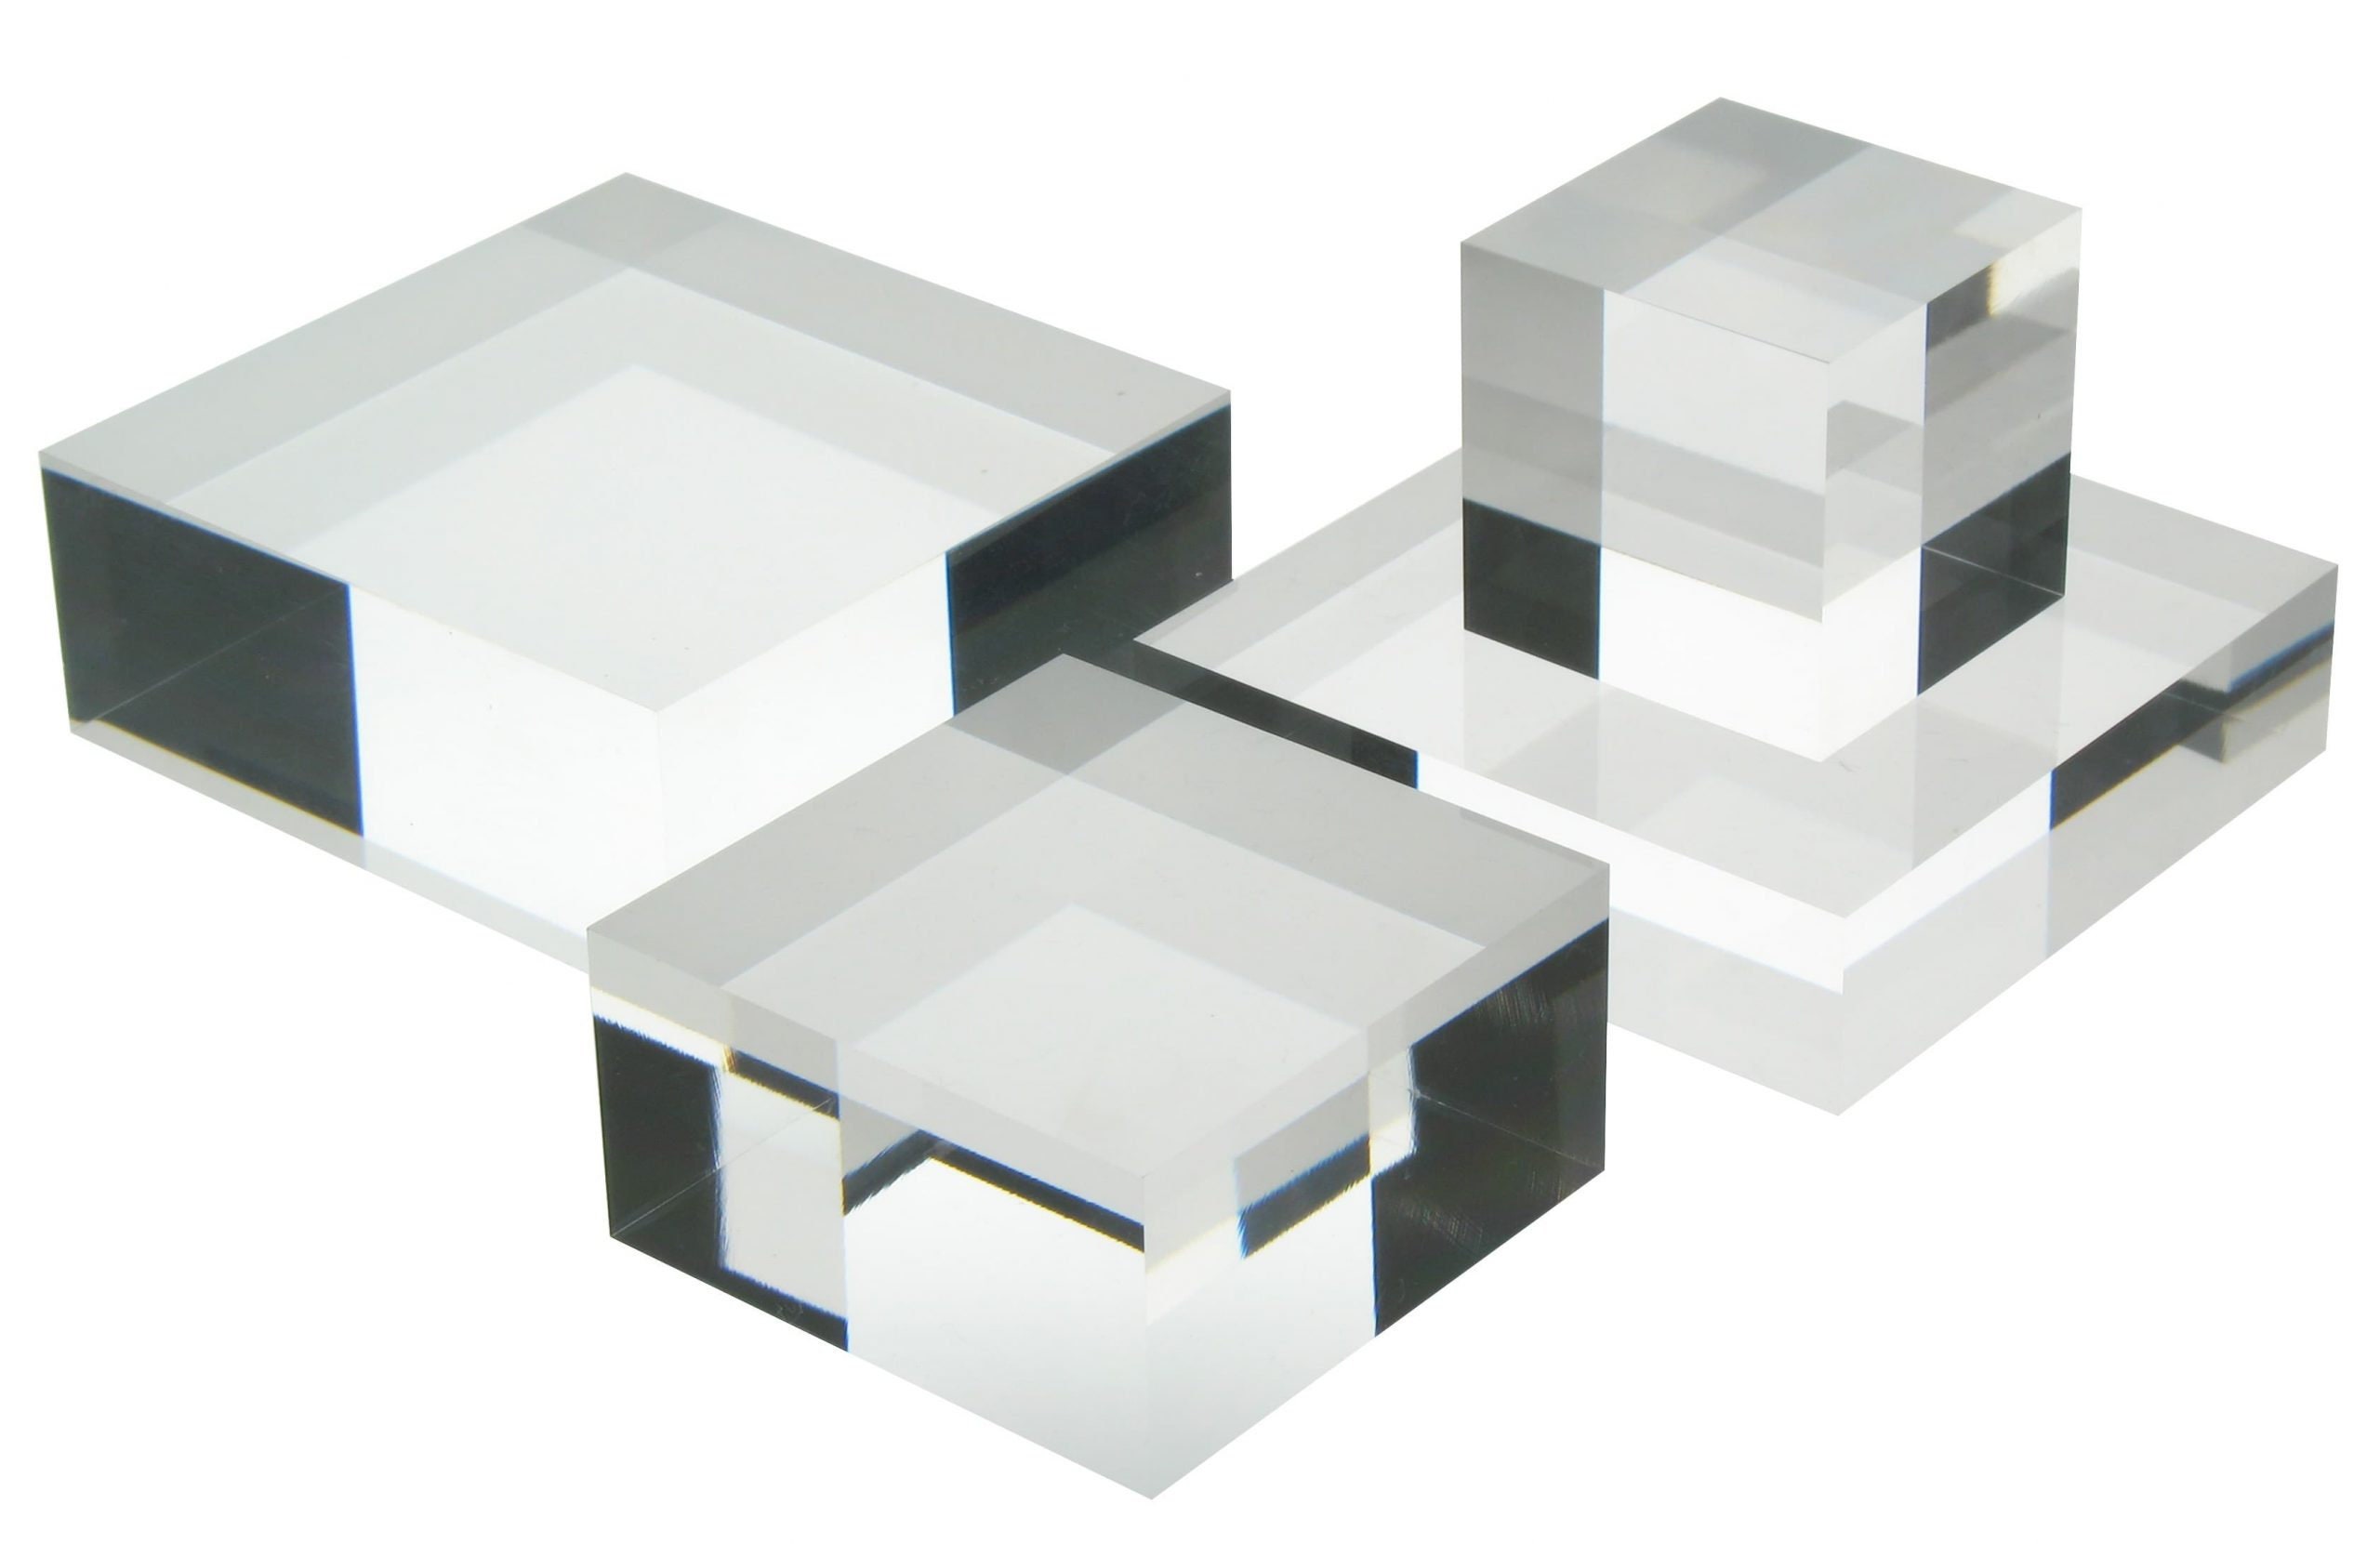 Elitnus Clear Solid Acrylic Display Block - 6 x 4 x 2.36 All